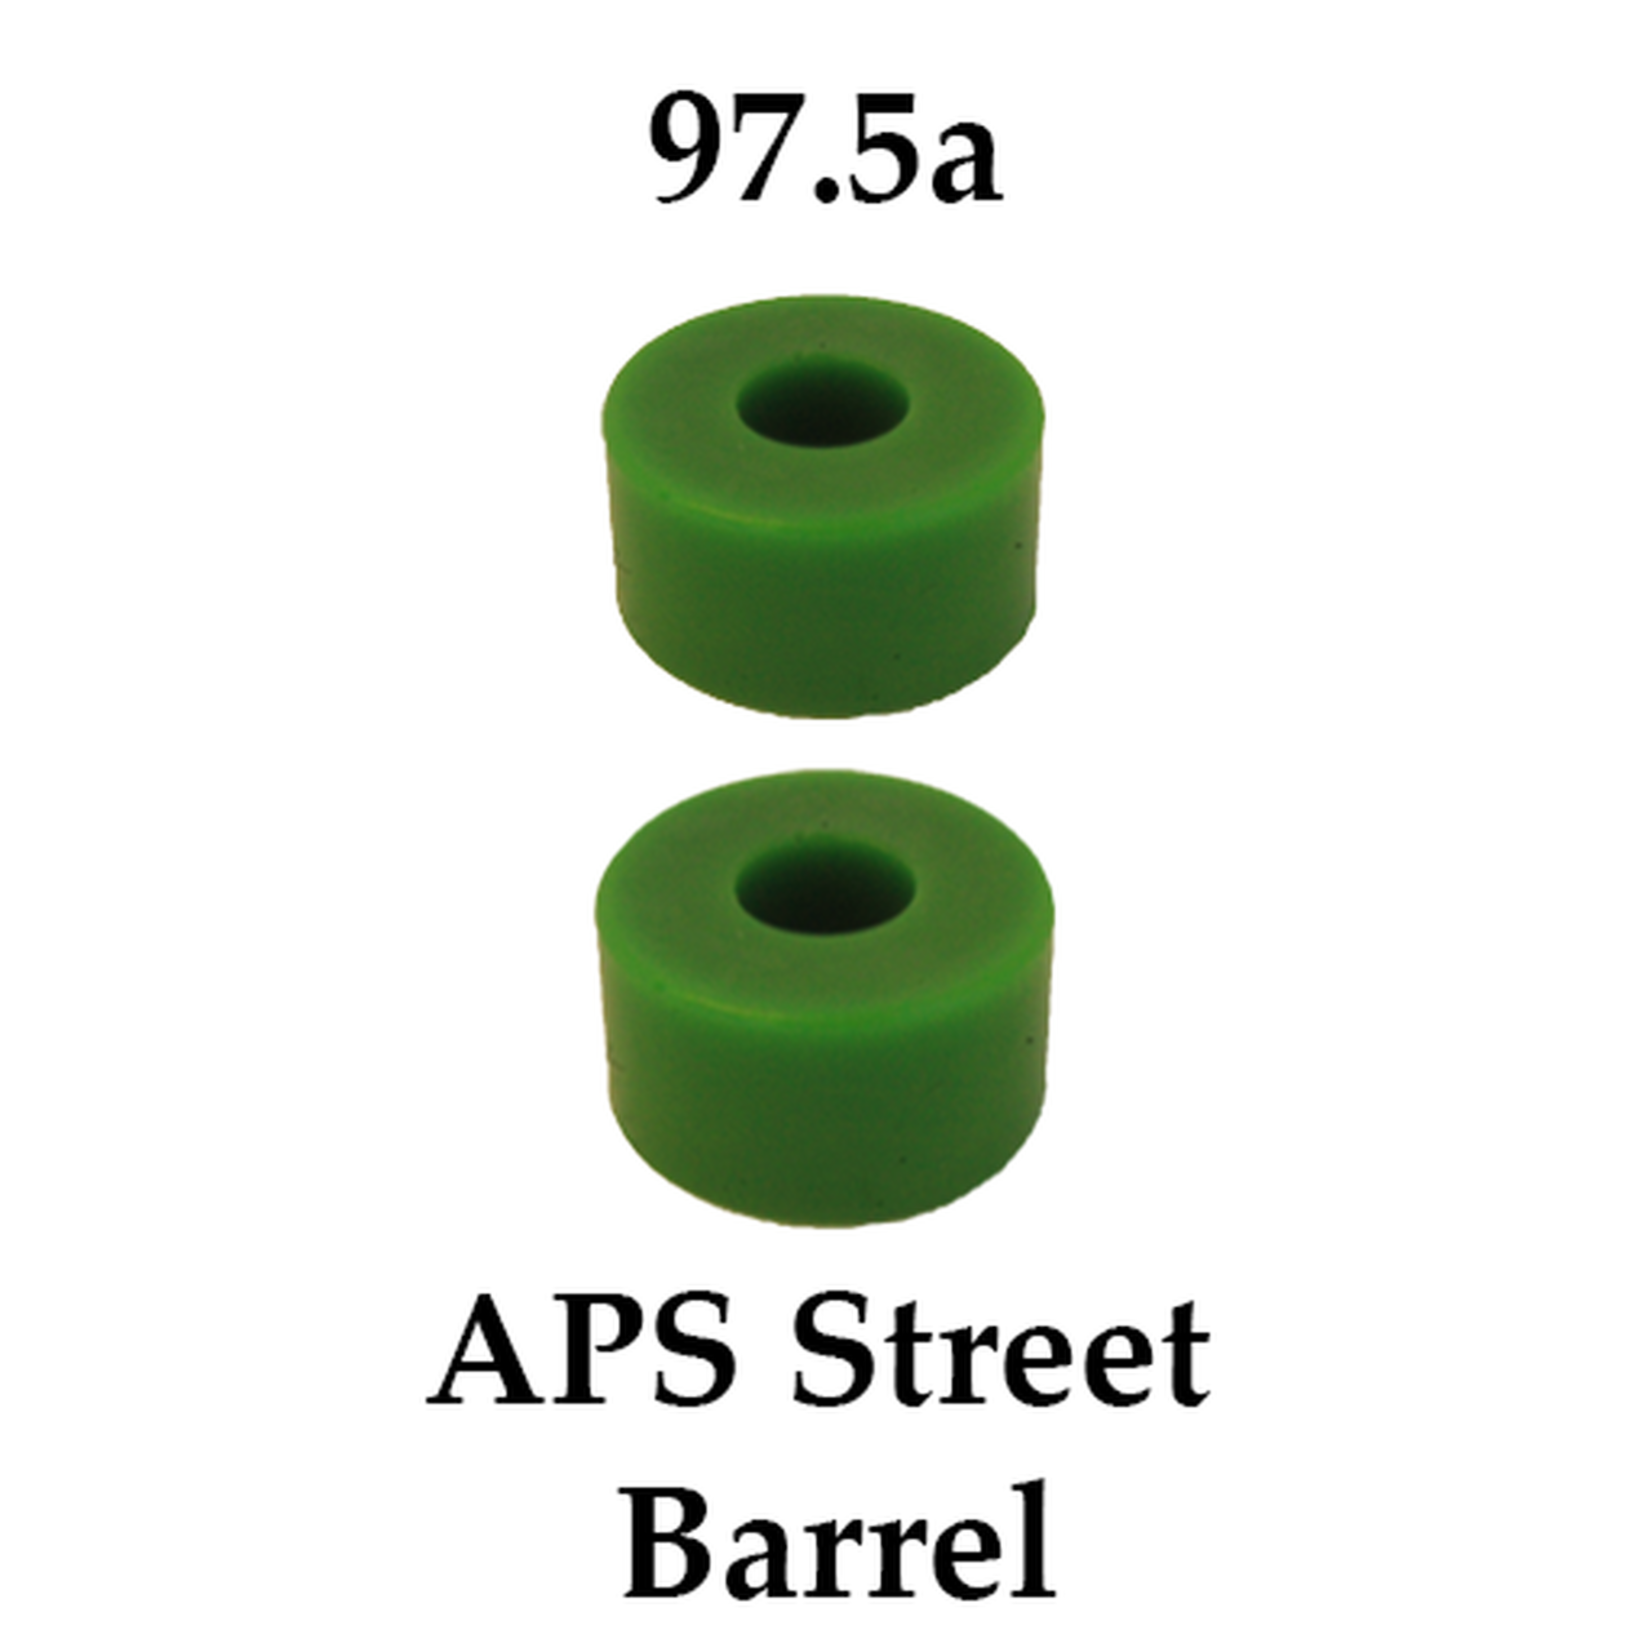 Riptide Sports APS Short Street Barrel